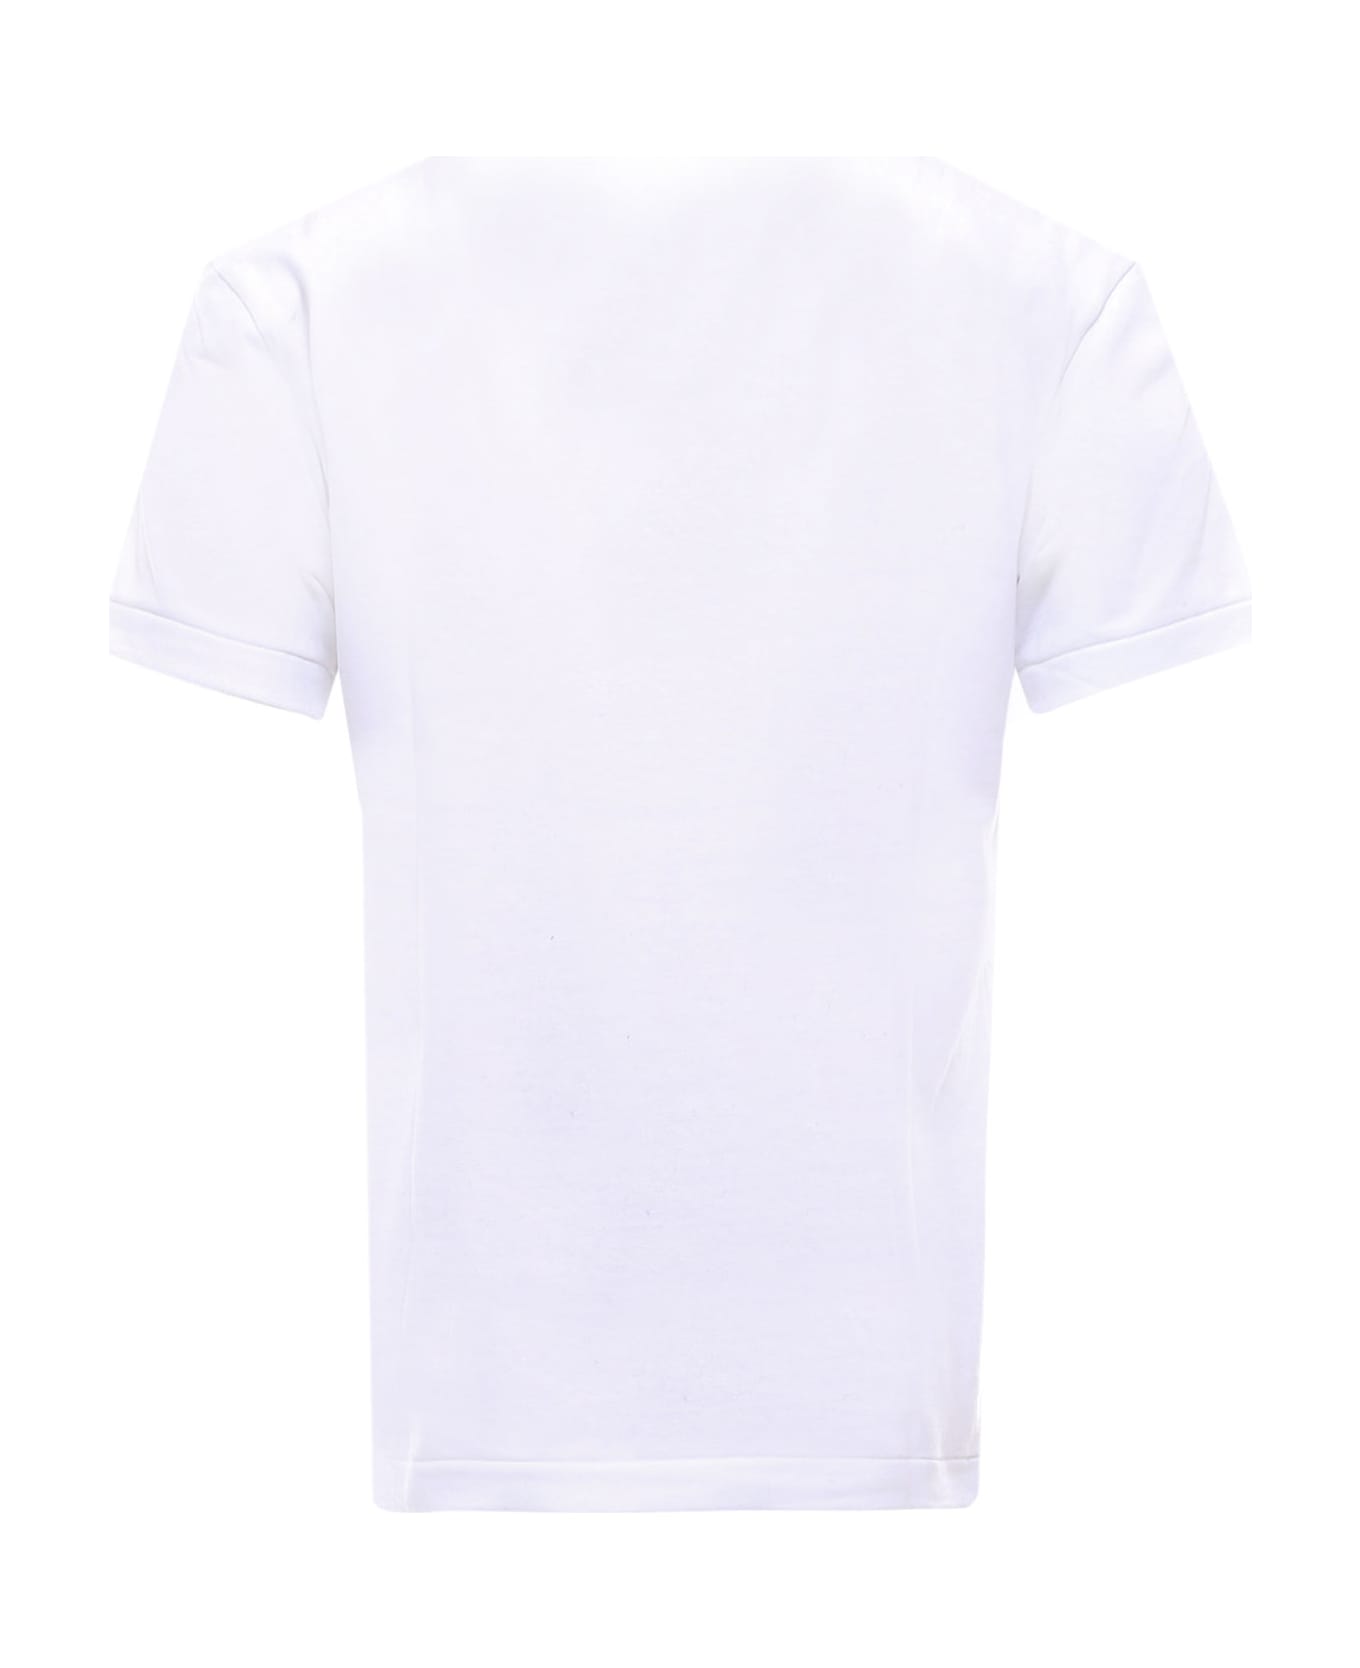 Comme des Garçons Play T-shirt - White